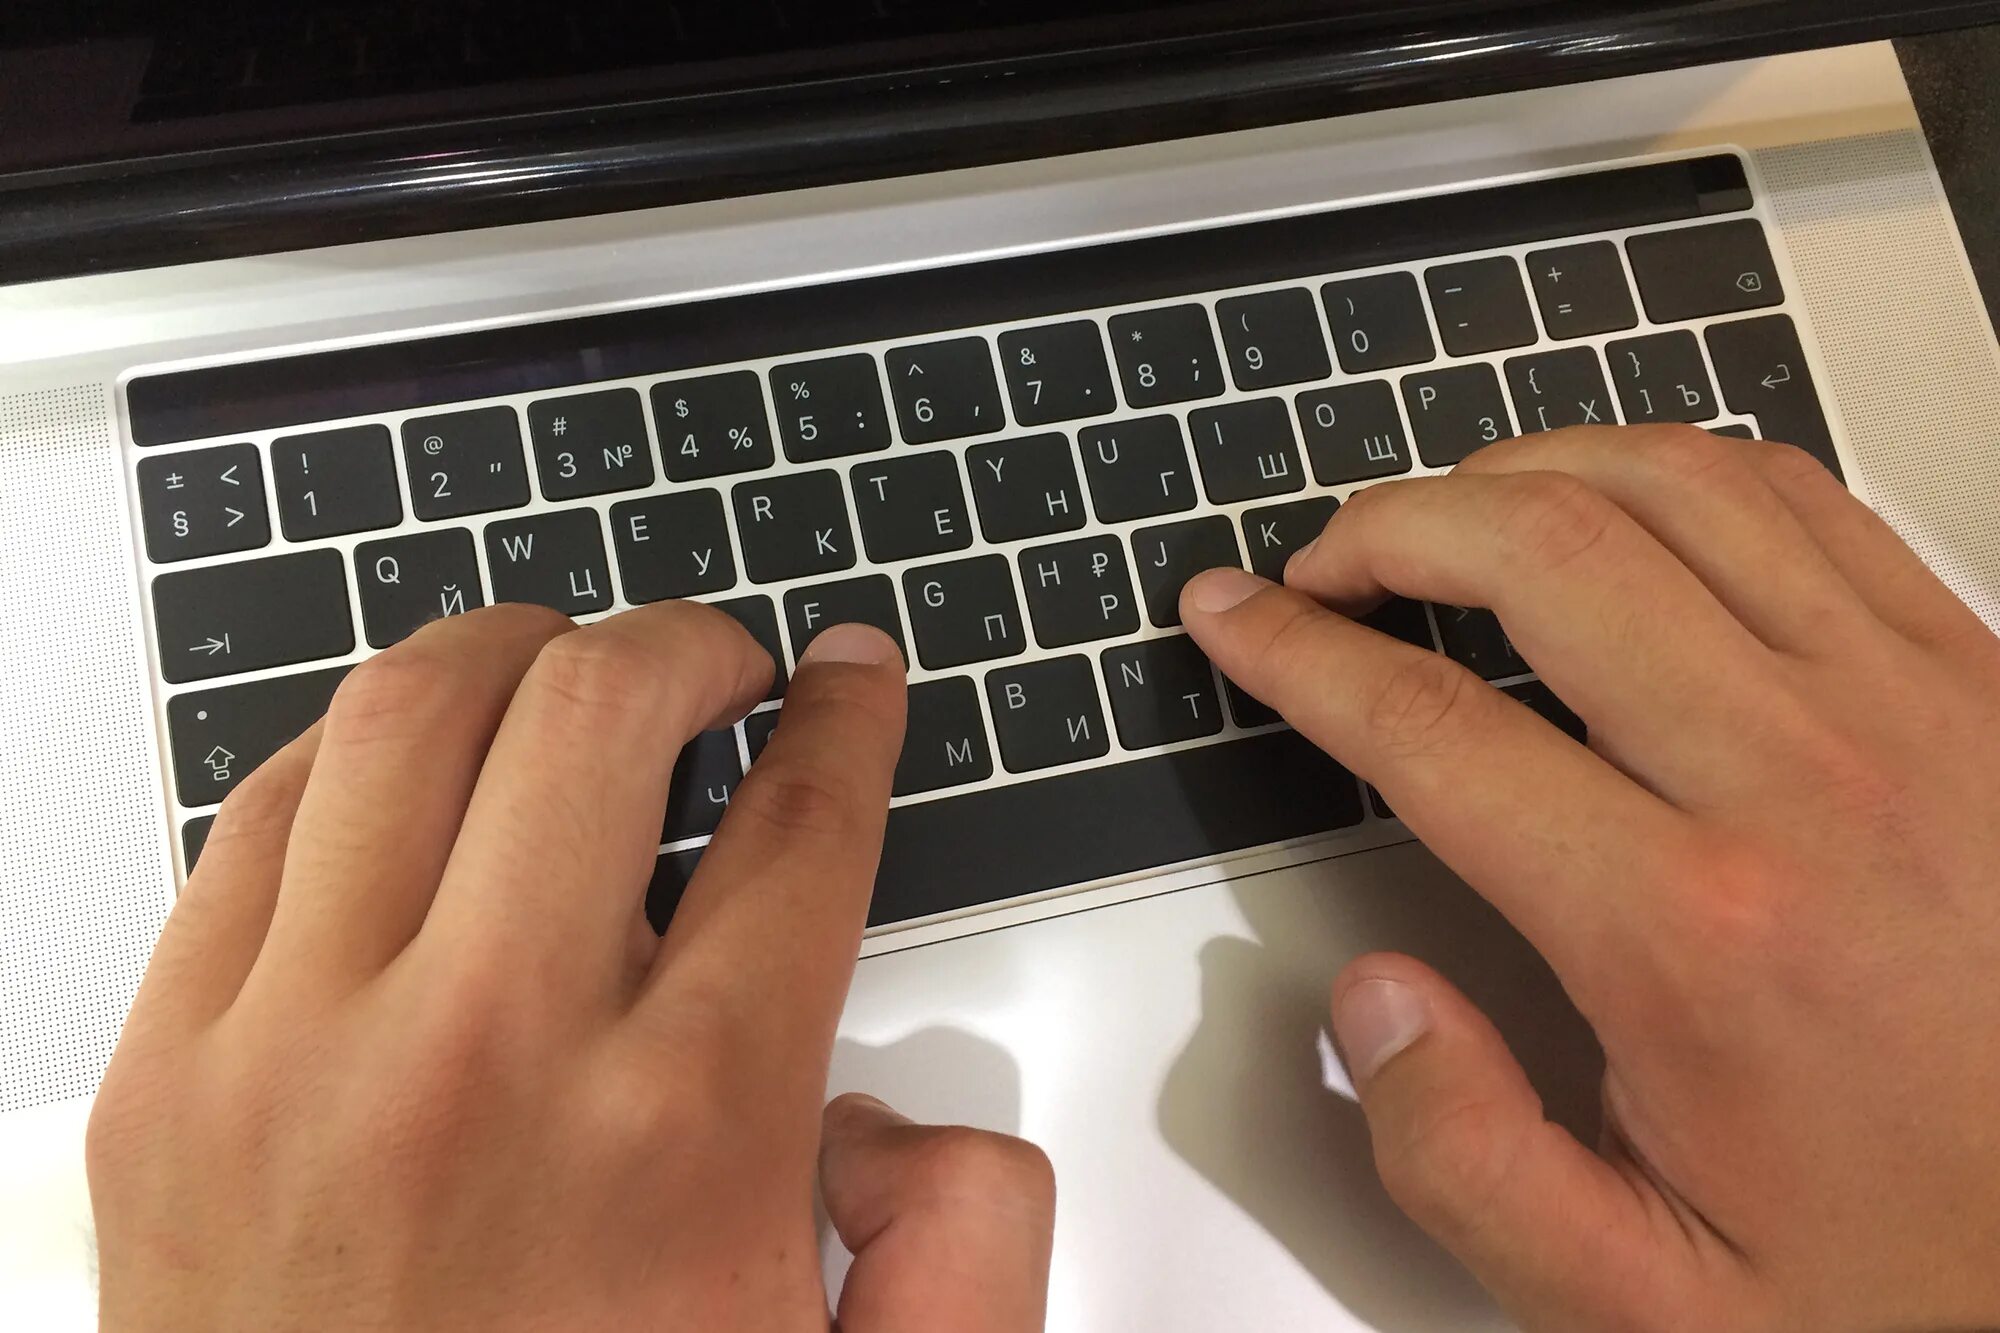 Typing topic. Пальцы на клавиатуре. Клавиатура. Компьютерная клавиатура. Клавиатура компьютера пальцы.